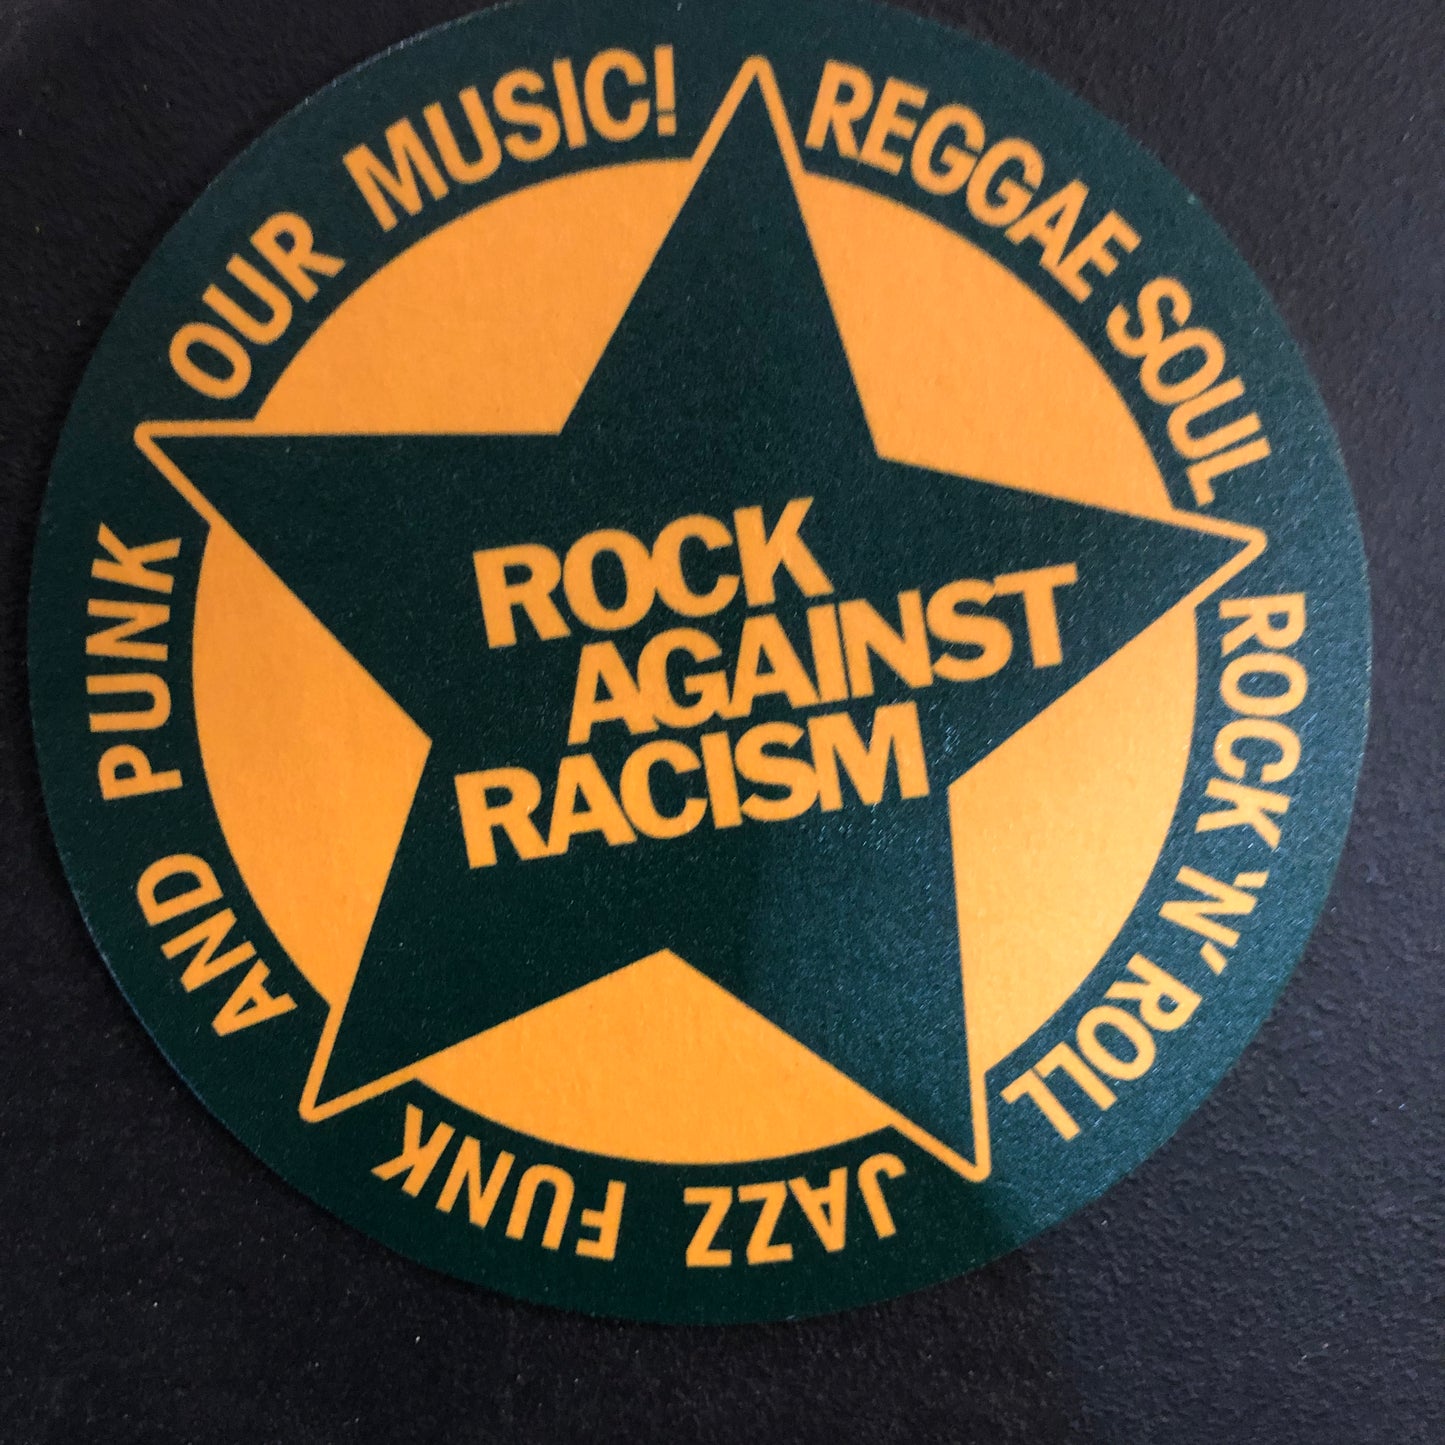 Stealworks "Rock Against Racism" Coaster